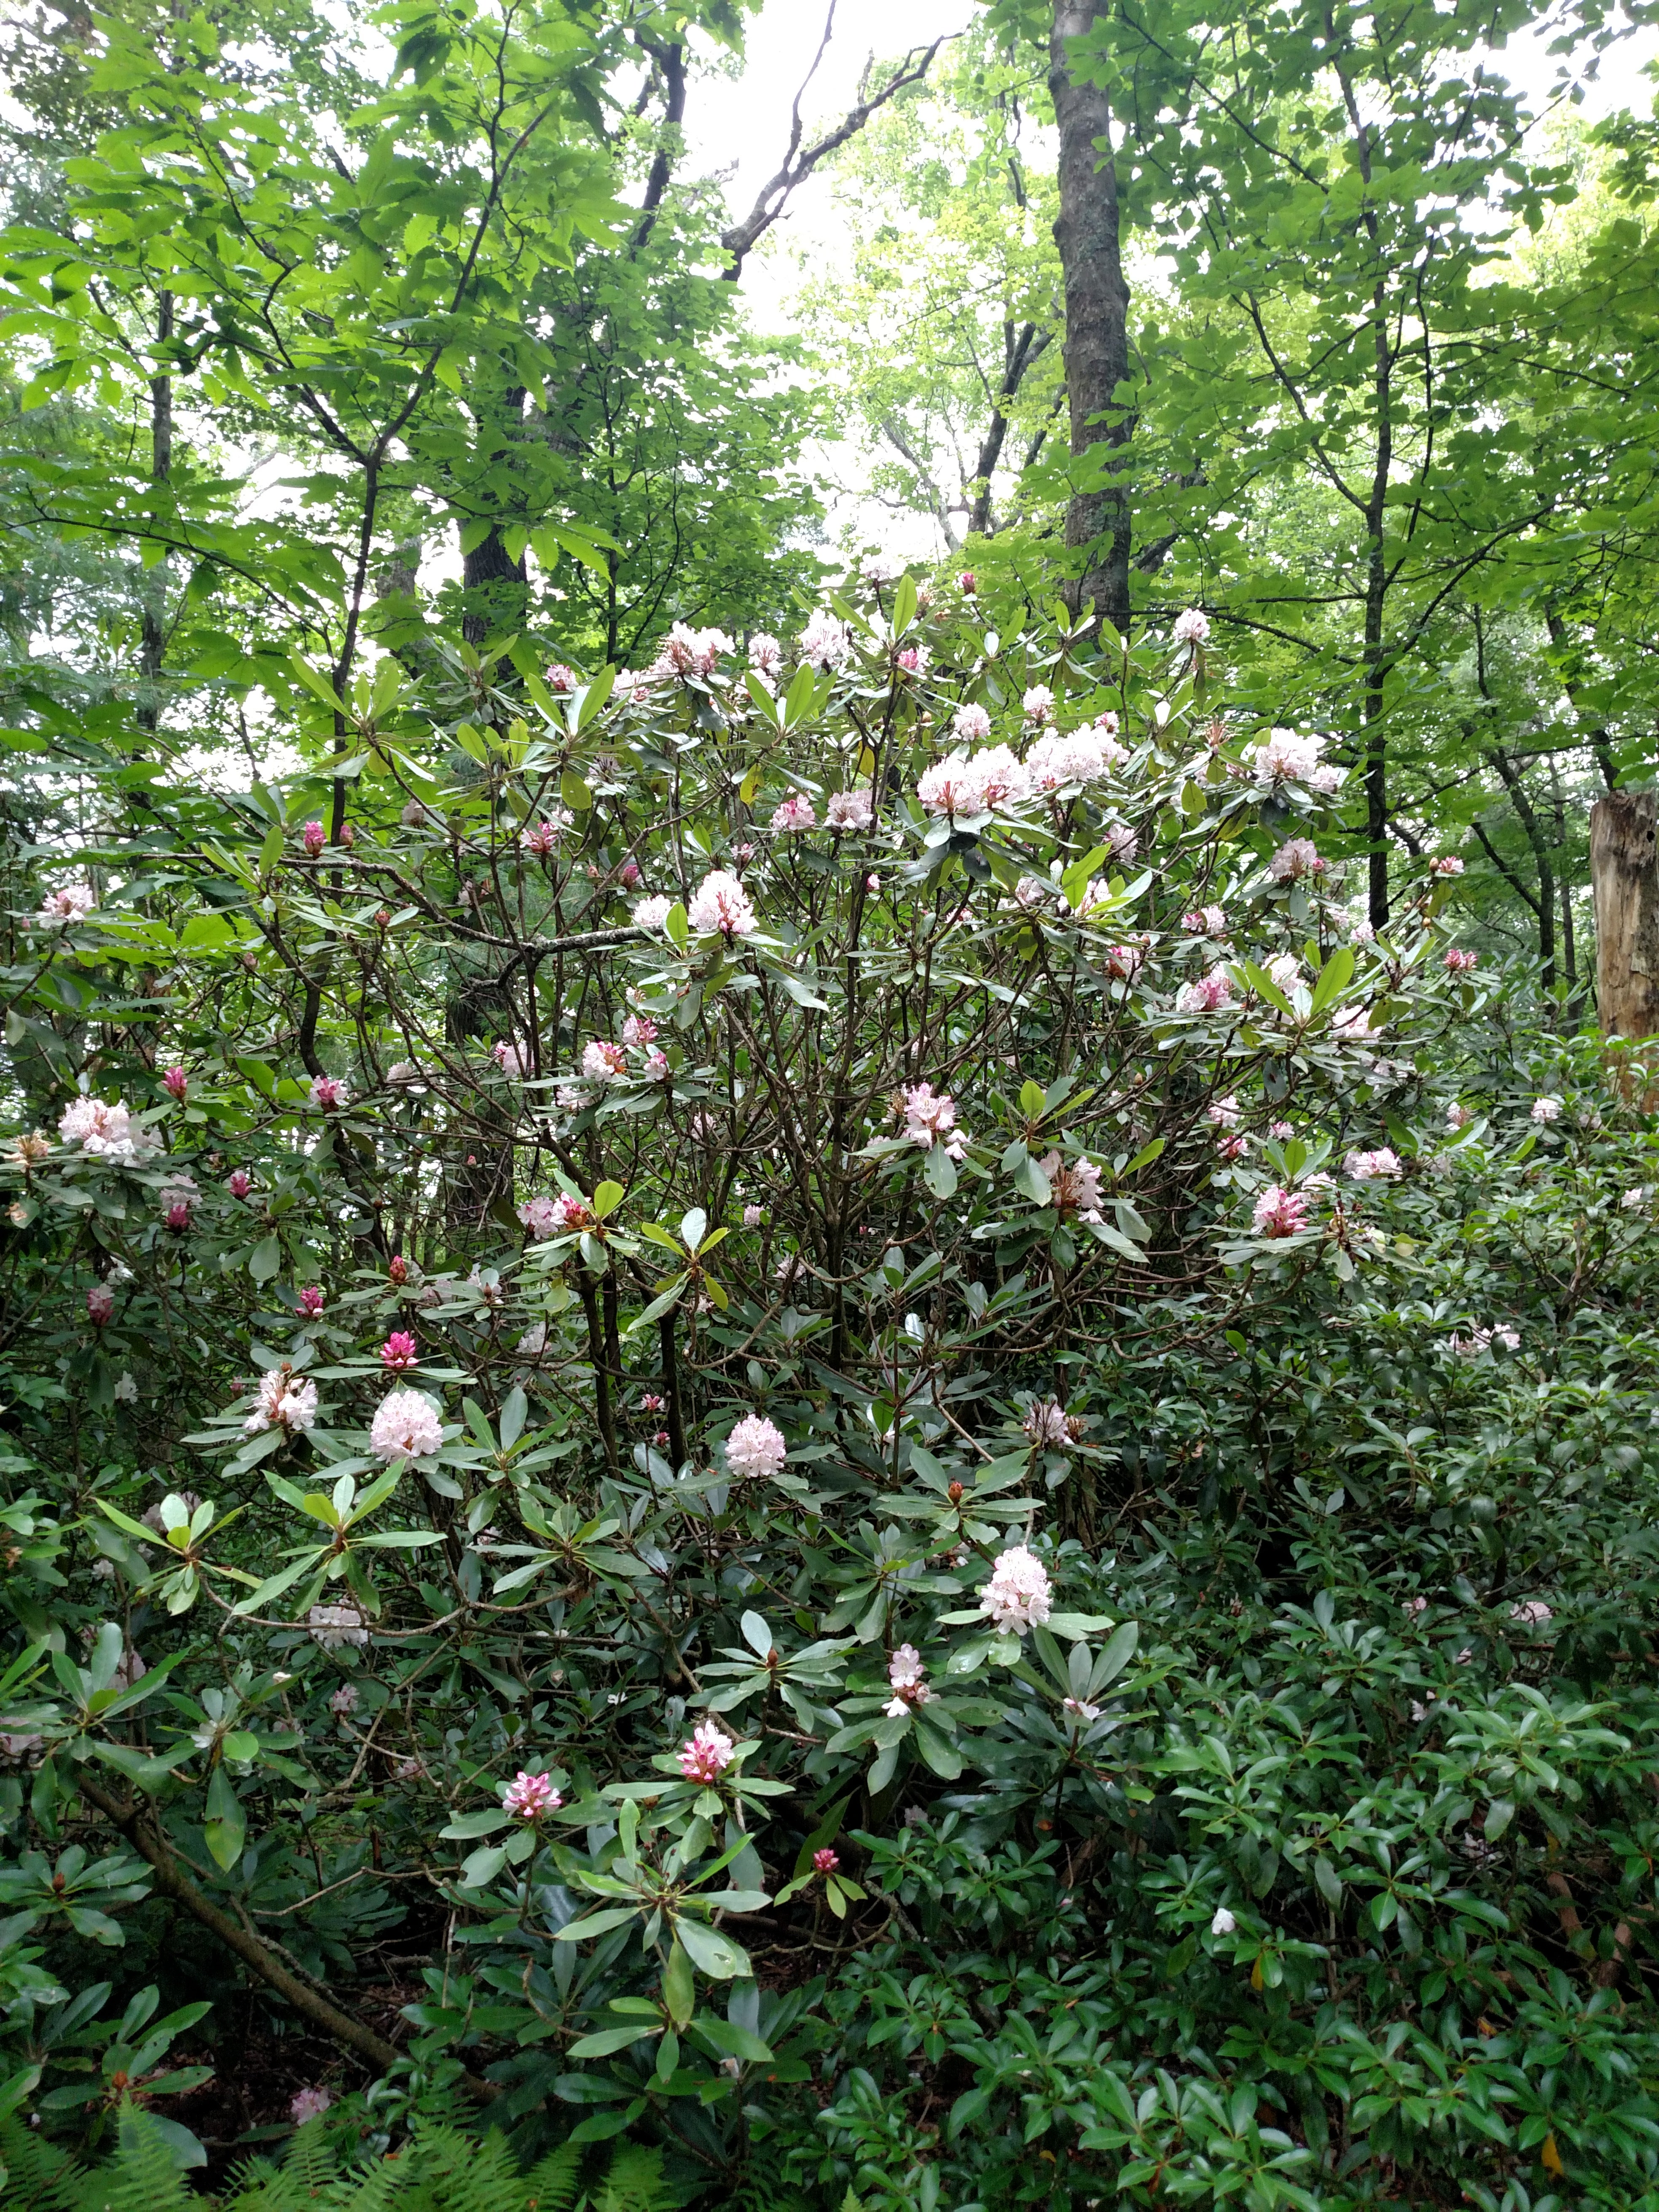 Rhododendran beside campsite